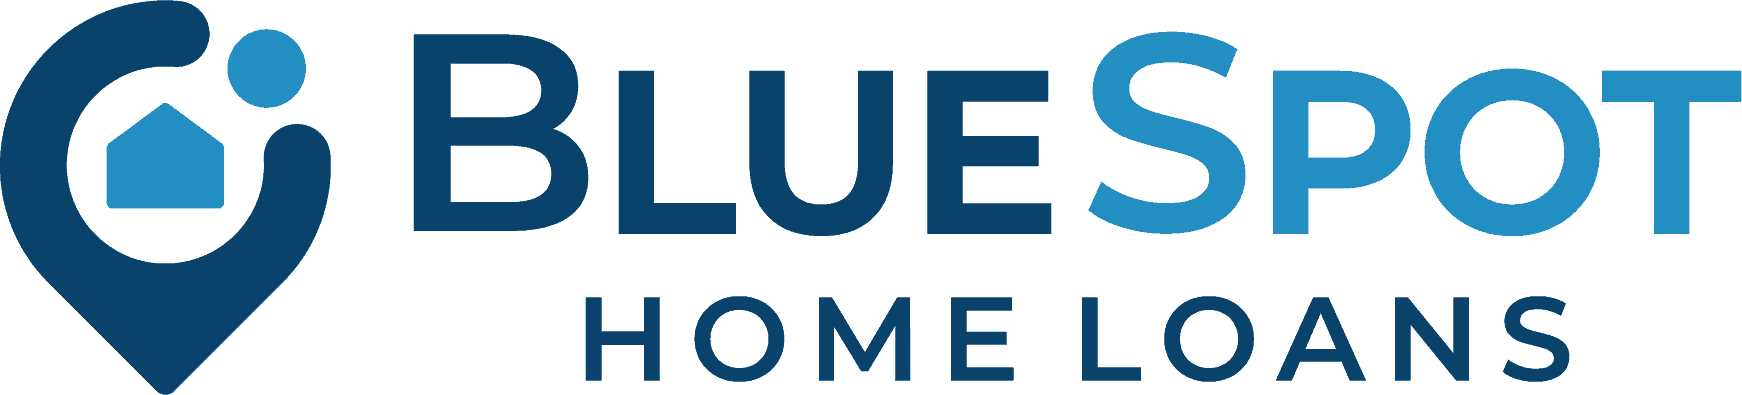 BlueSpot Home Loans logo